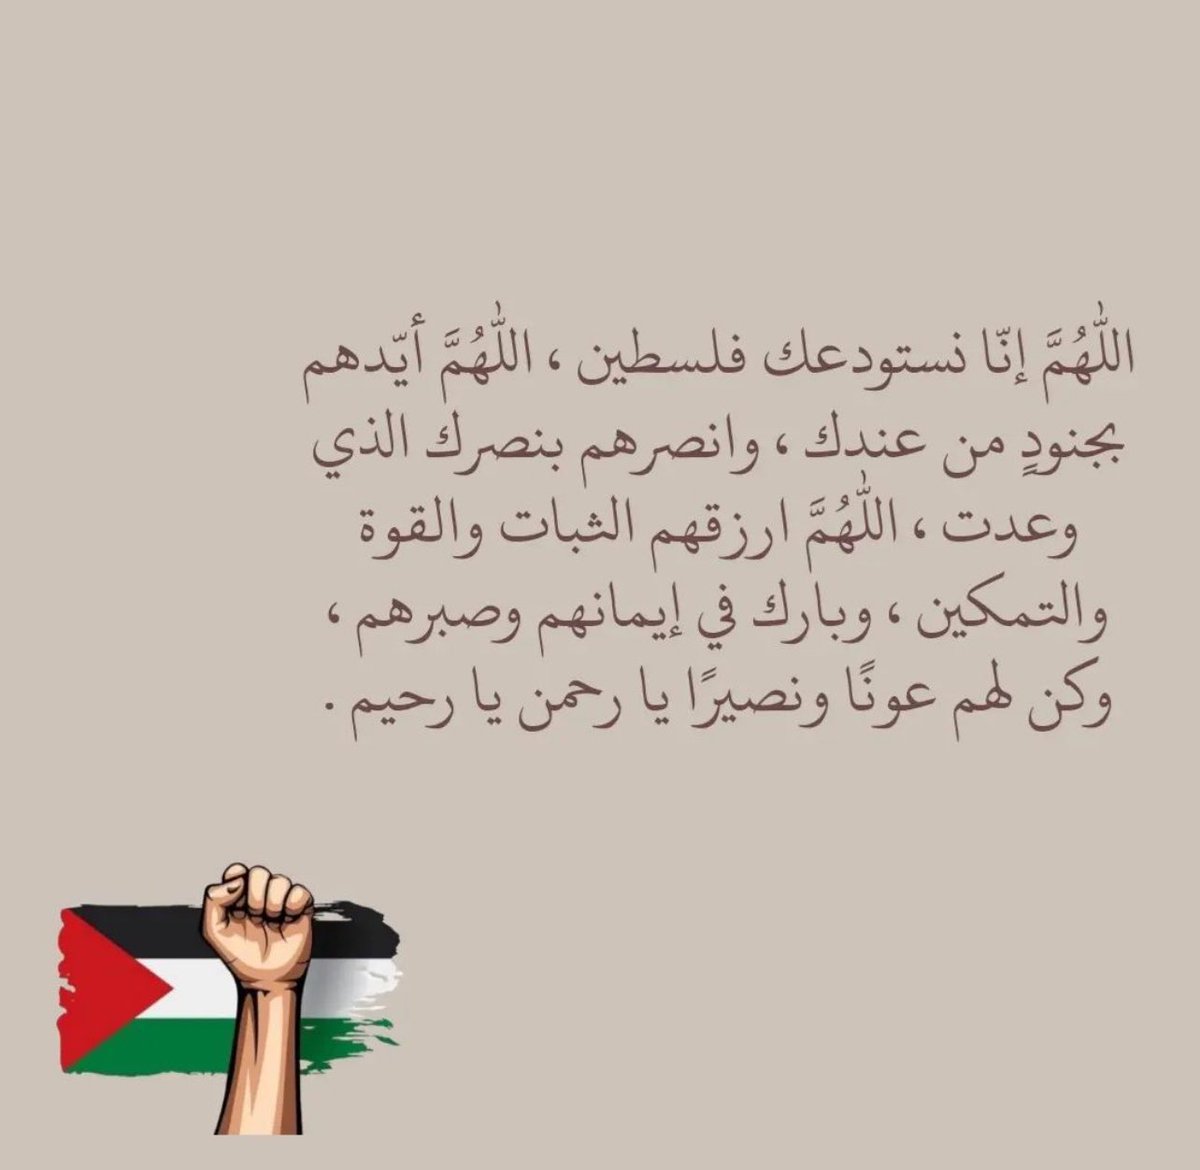 #FreePalaestine 
#GazaUnderAttack 
#PalestineUnderAttac 
#غزة_تحت_القصف